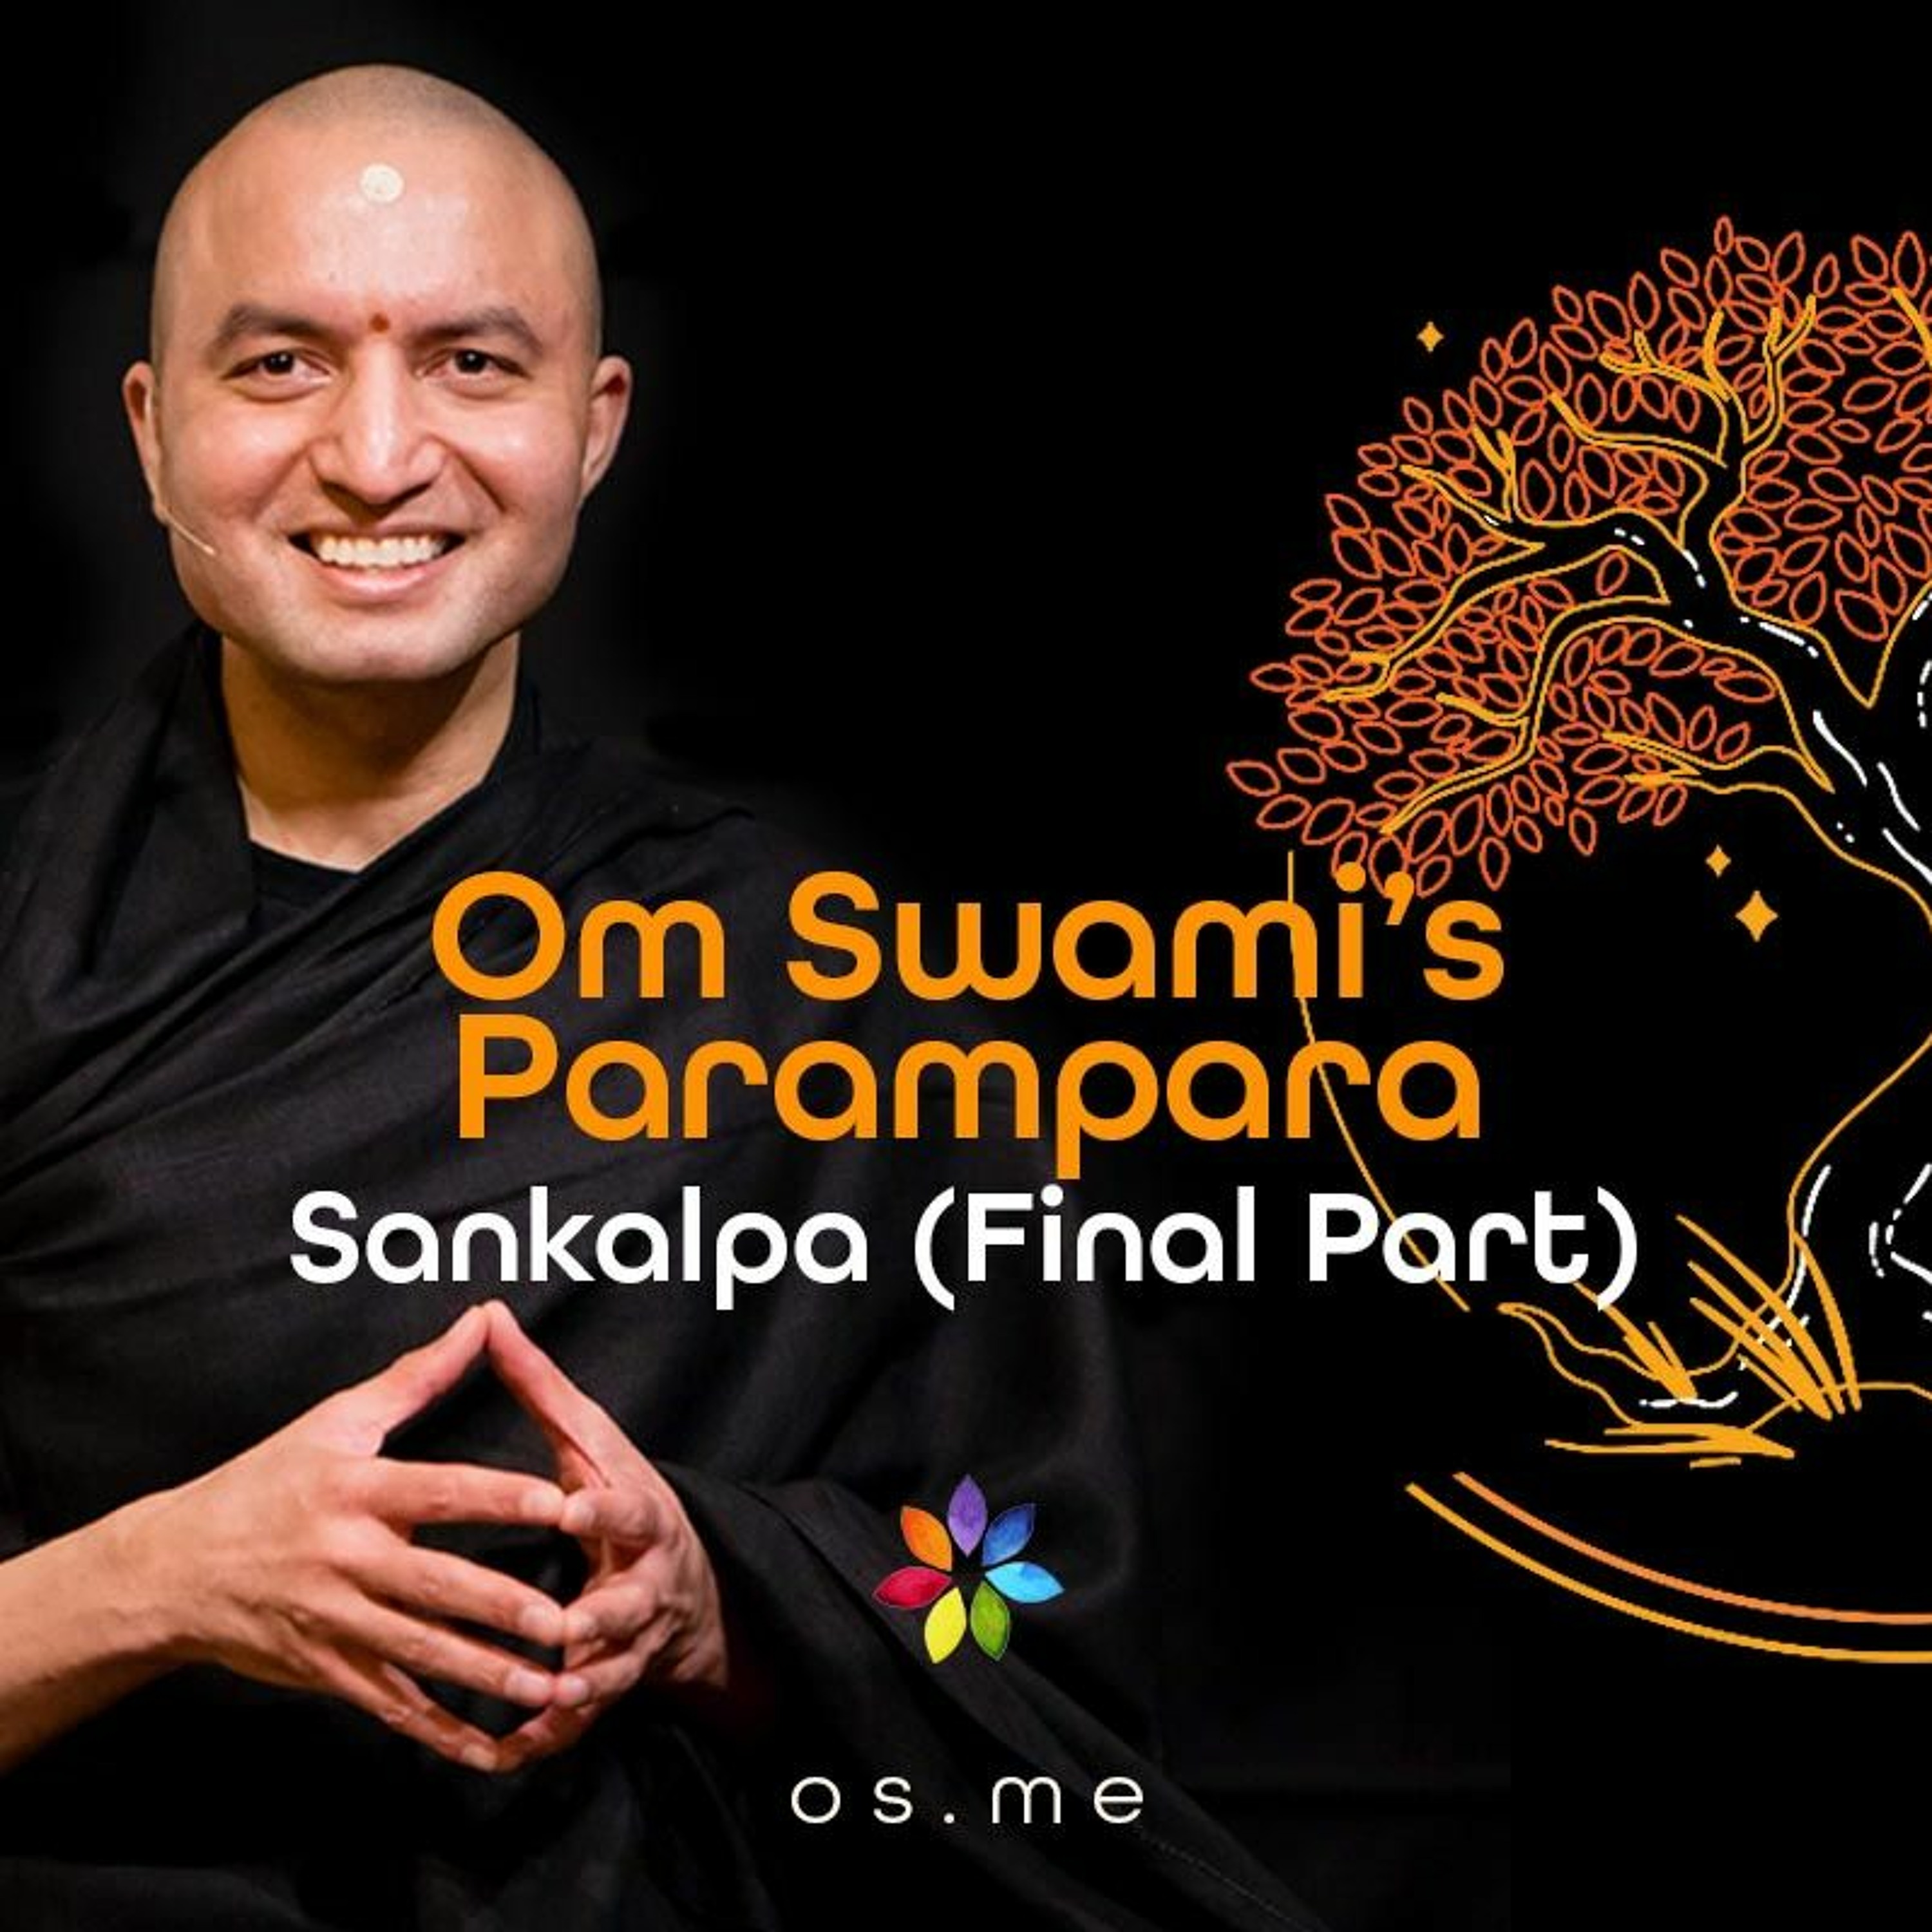 Om Swami's Parampara (Lineage)- Importance of Sankalpa (Final Part) - [Hindi ]